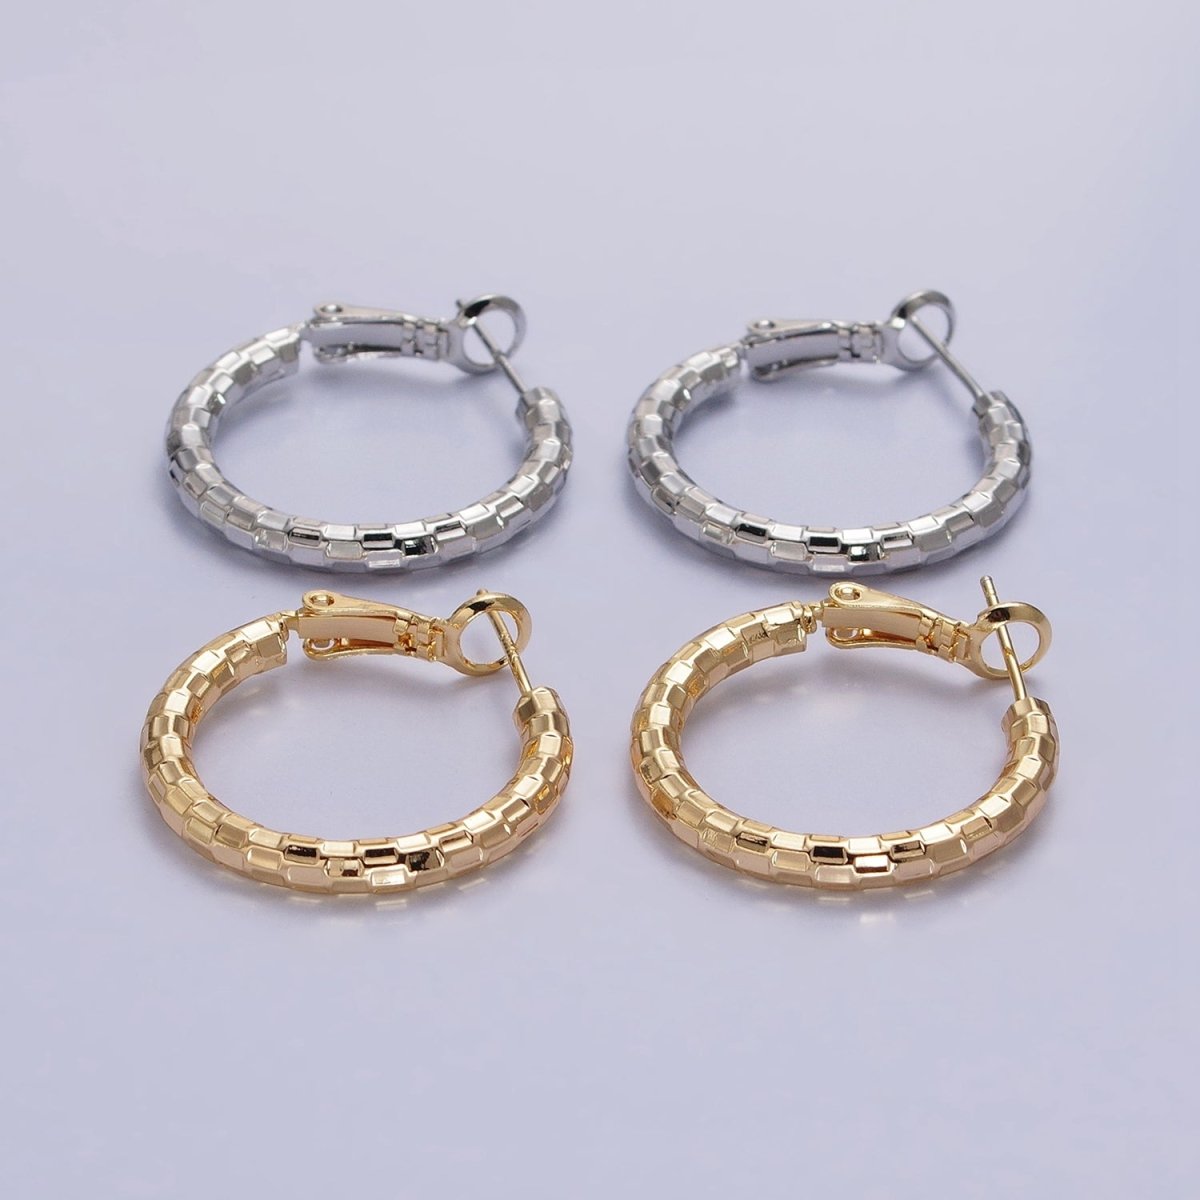 Gold, Silver Rectangular Bar Edged Textured 25mm, 20mm Hinge Latch Earrings | AB623 - AB626 - DLUXCA